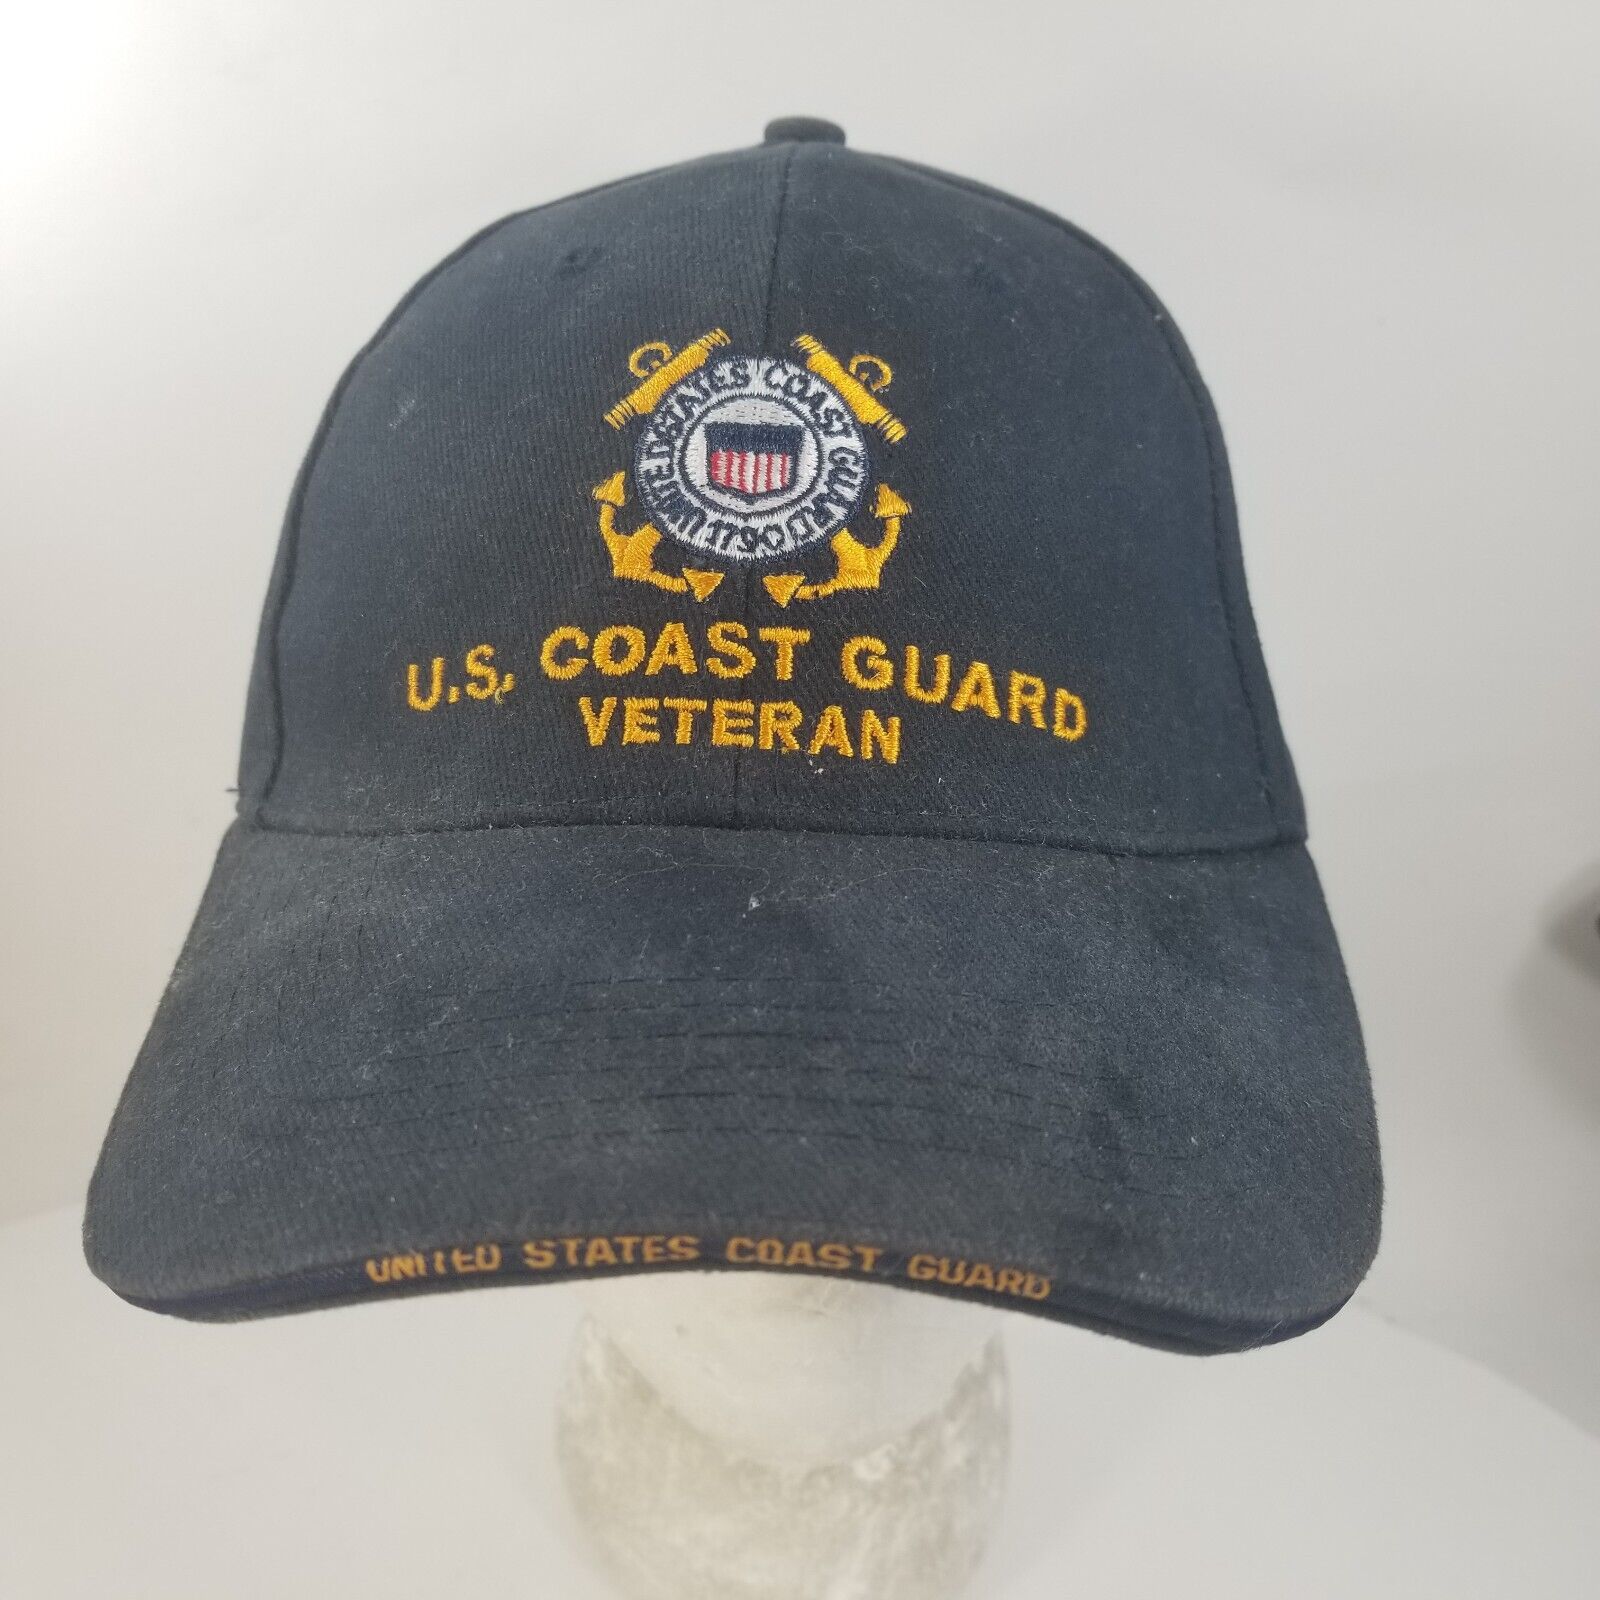 US Coast Guard Veteran Corp, Military Cap/Hat Blue Yellow Anchor